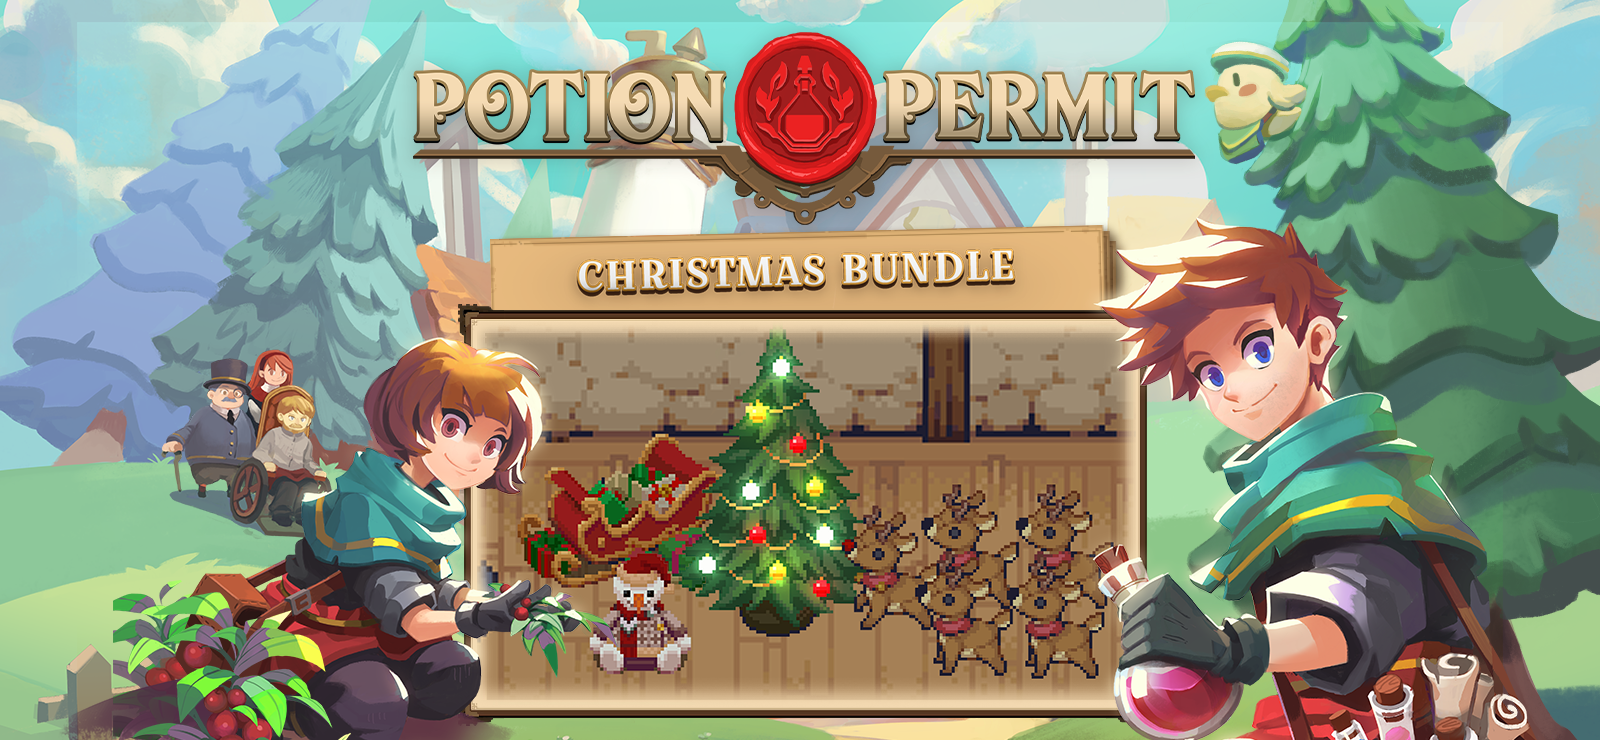 Potion Permit - Christmas Bundle